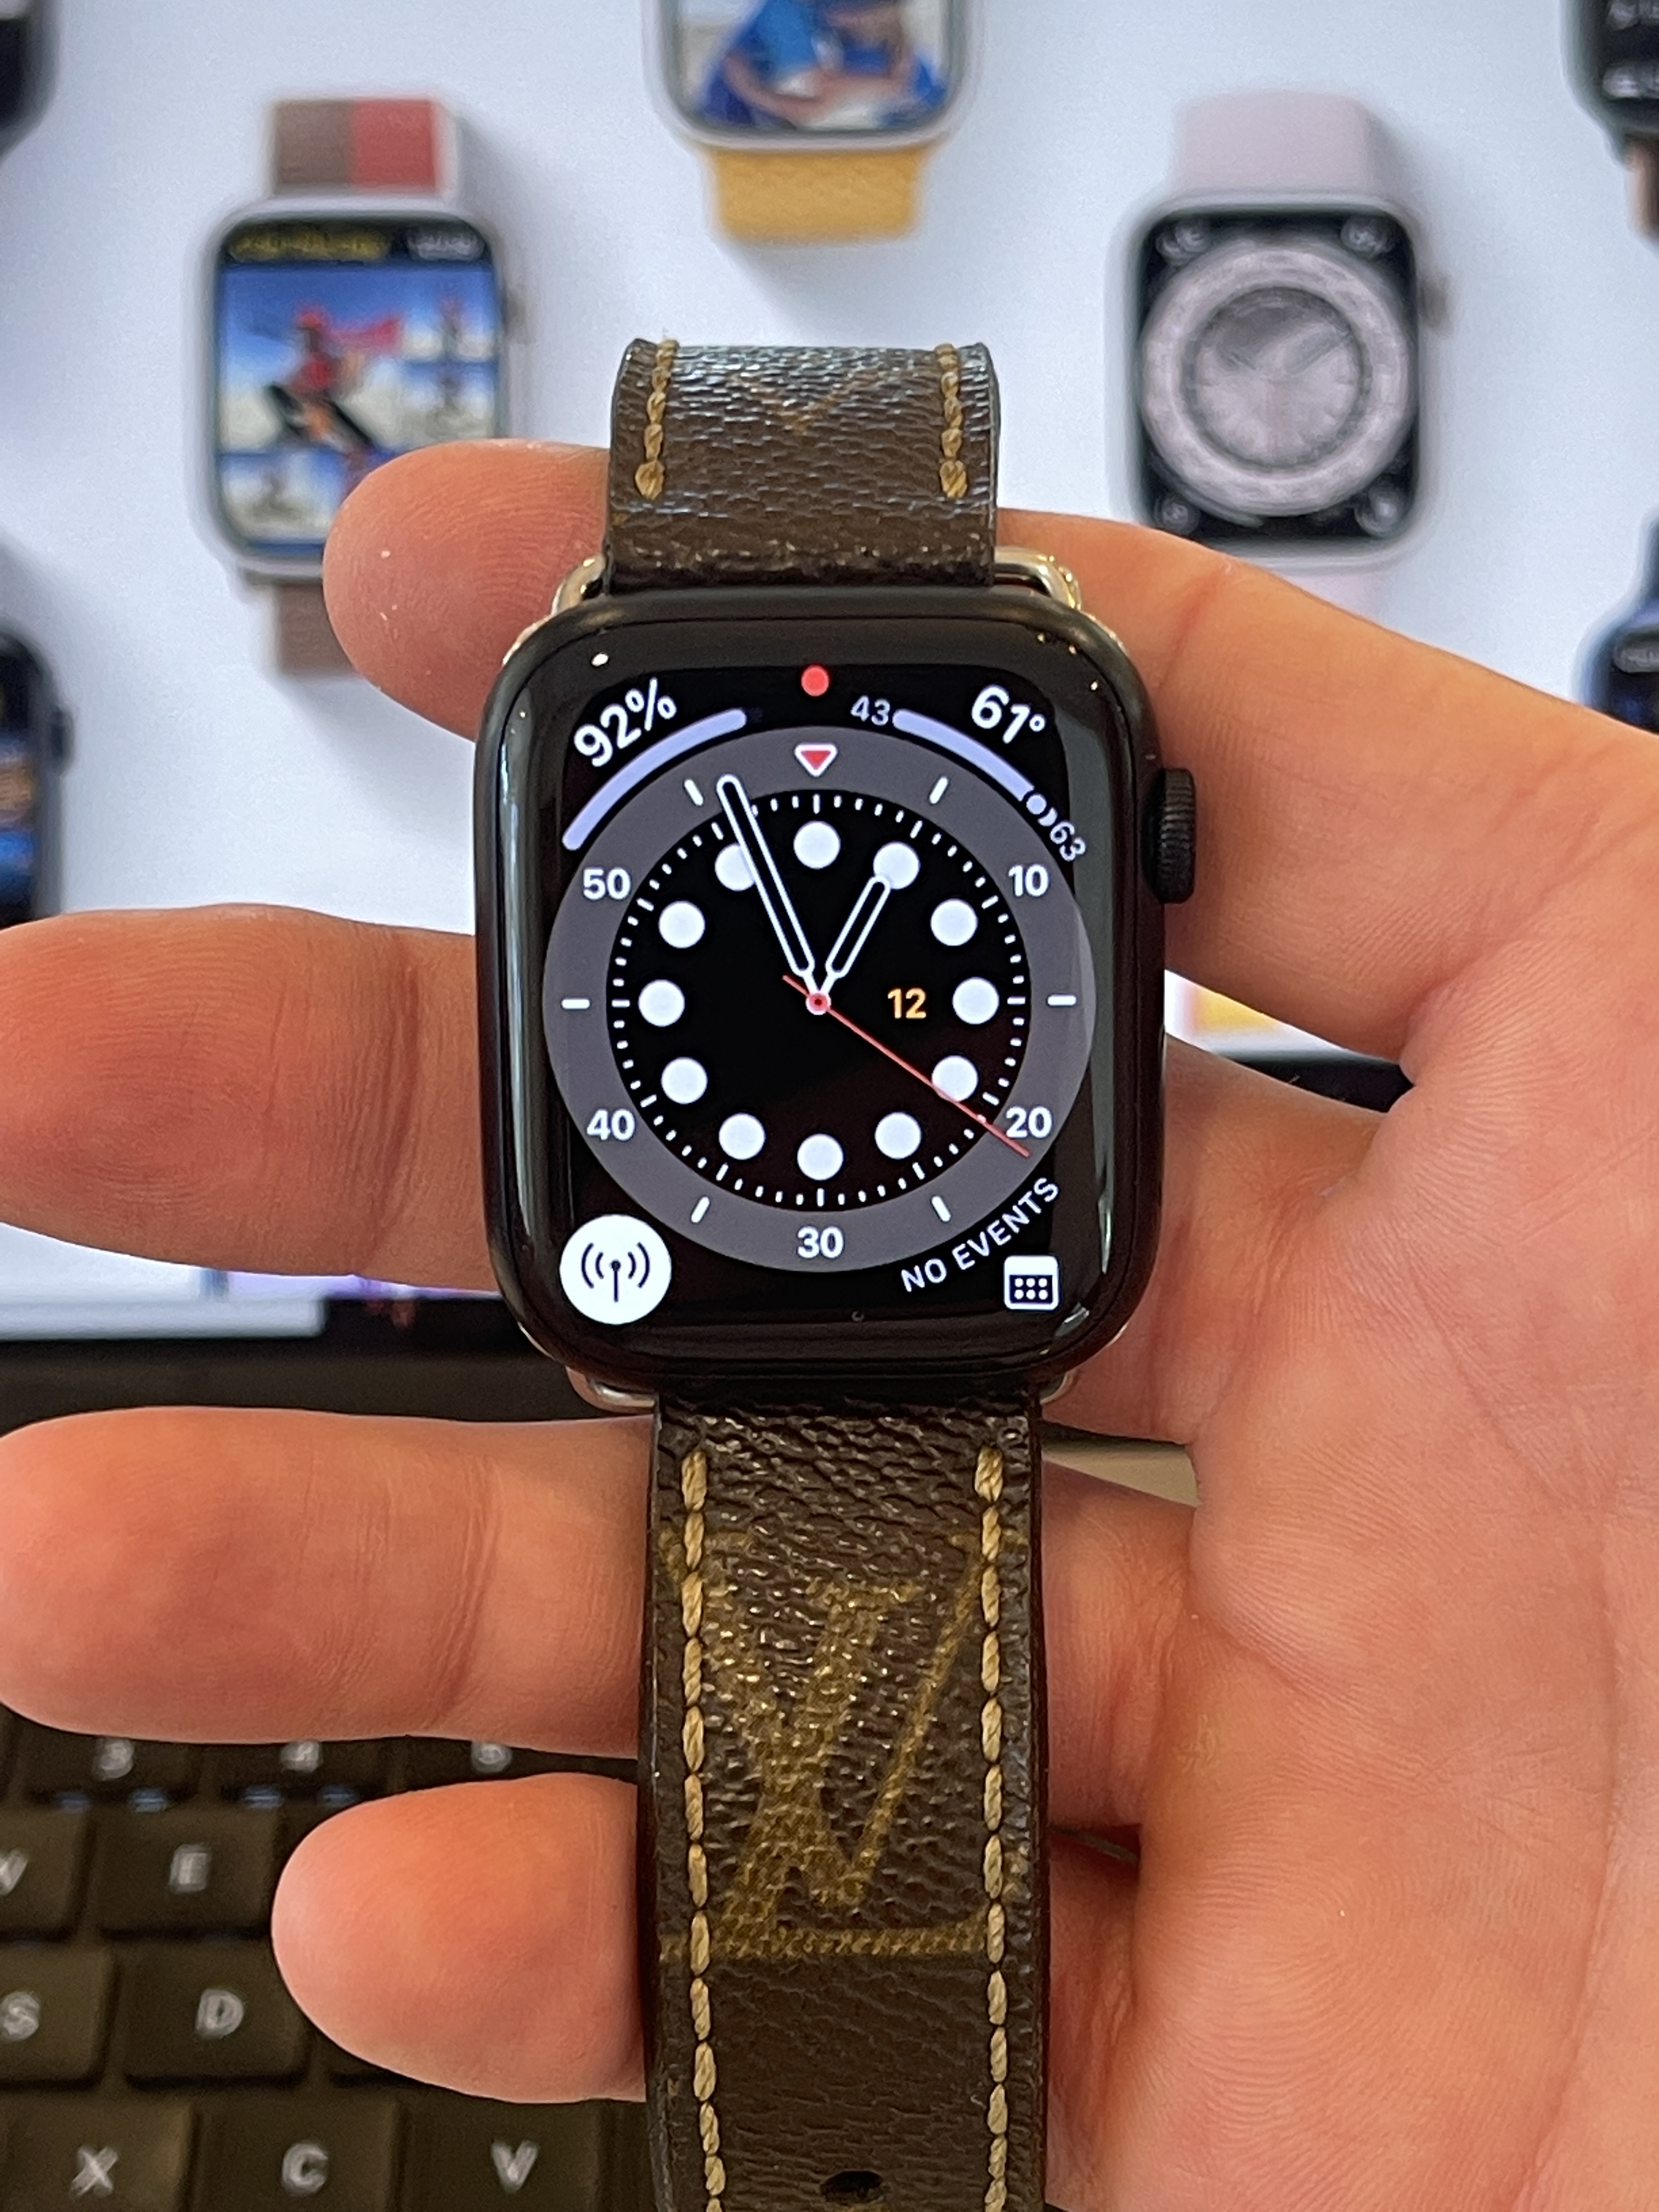 Casey Neistat on X: dear @Apple i like my new watch but have a